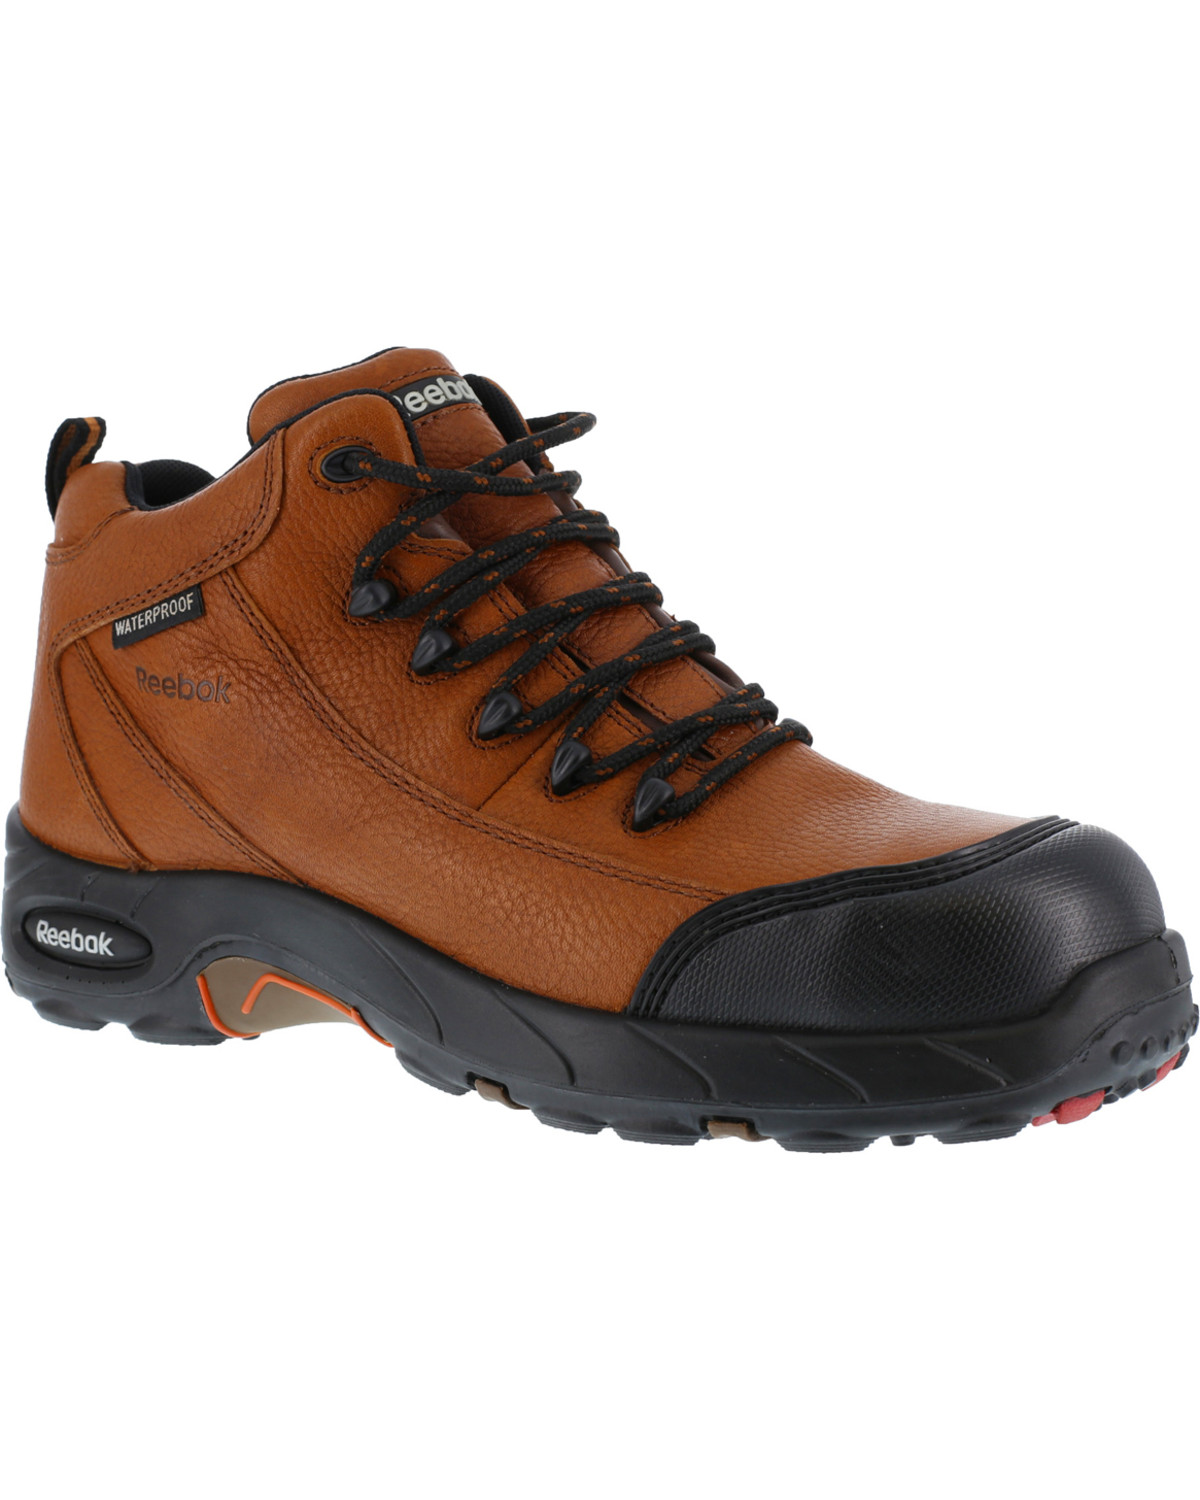 composite toe hiker boots